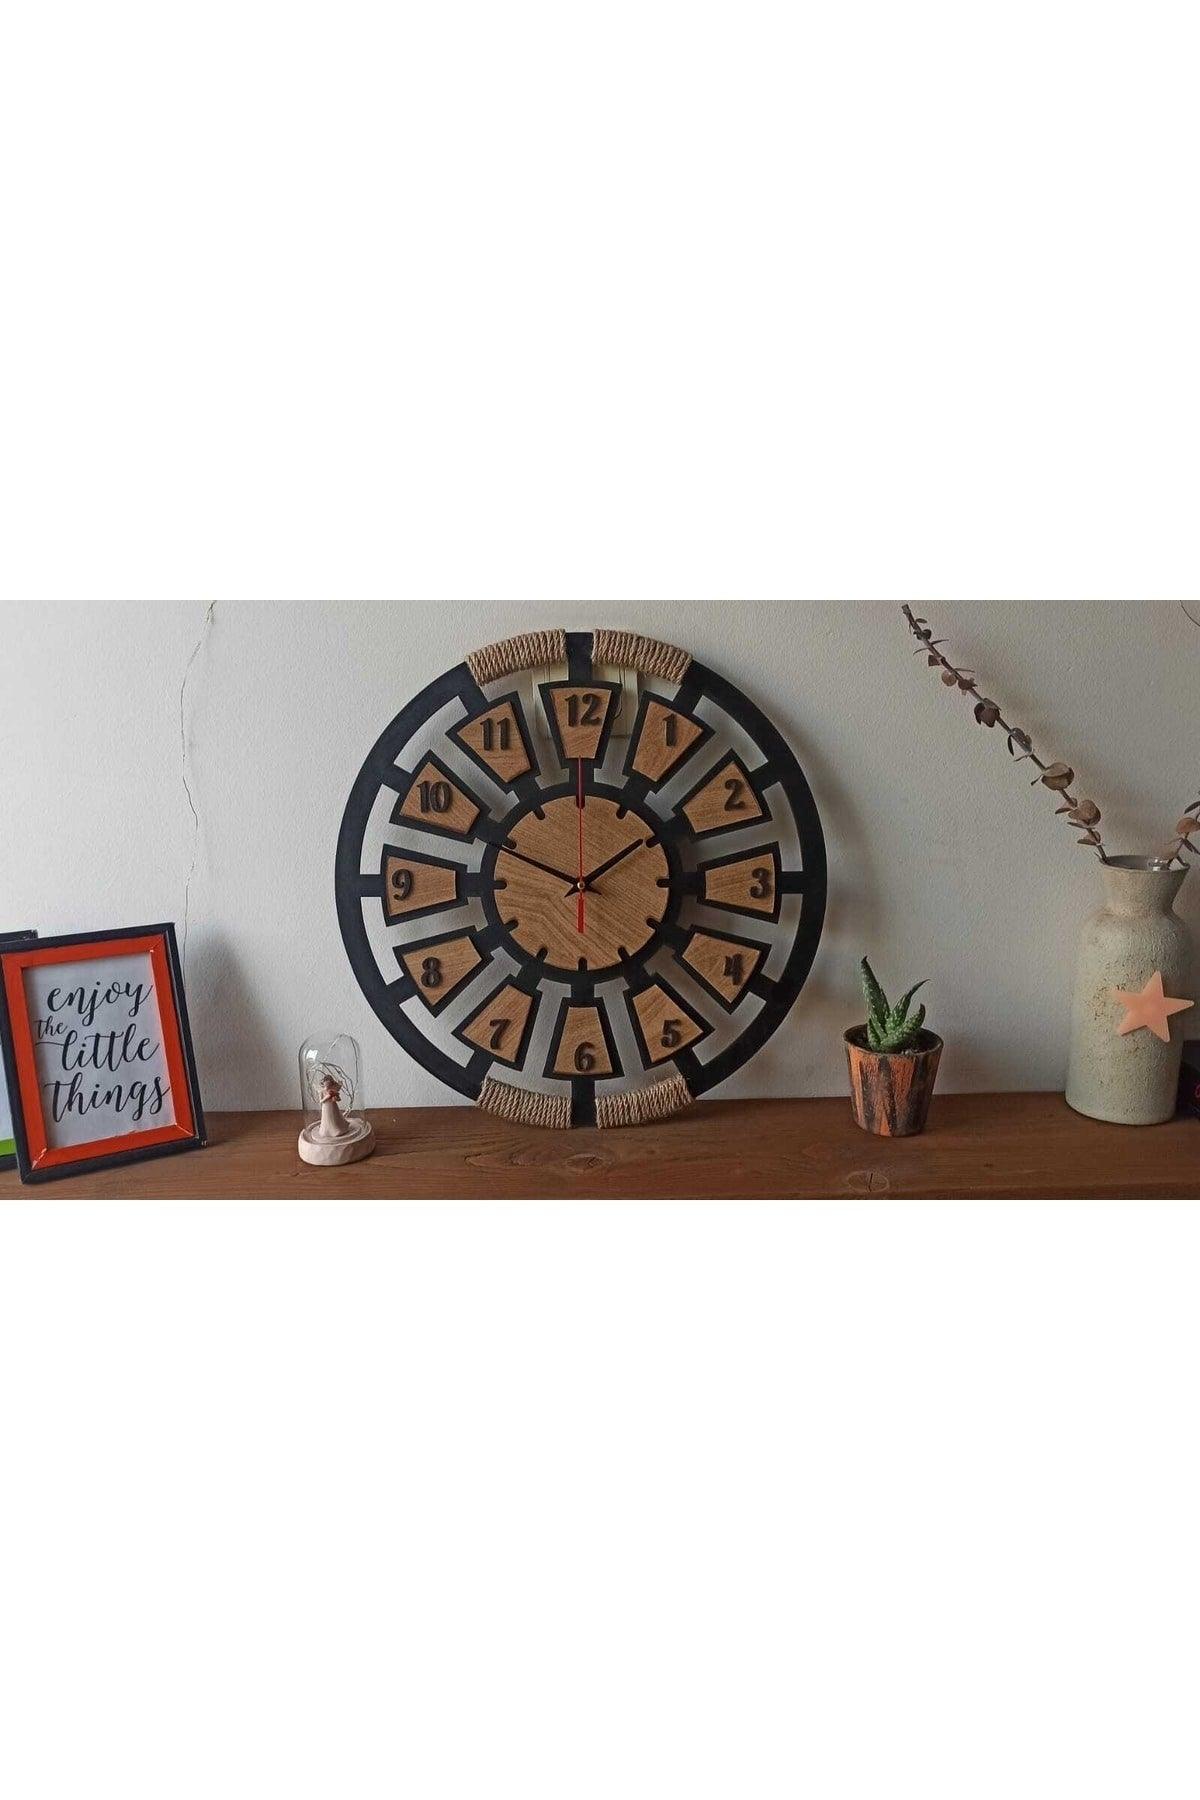 Decorative Jute Thread Wall Clock - Swordslife